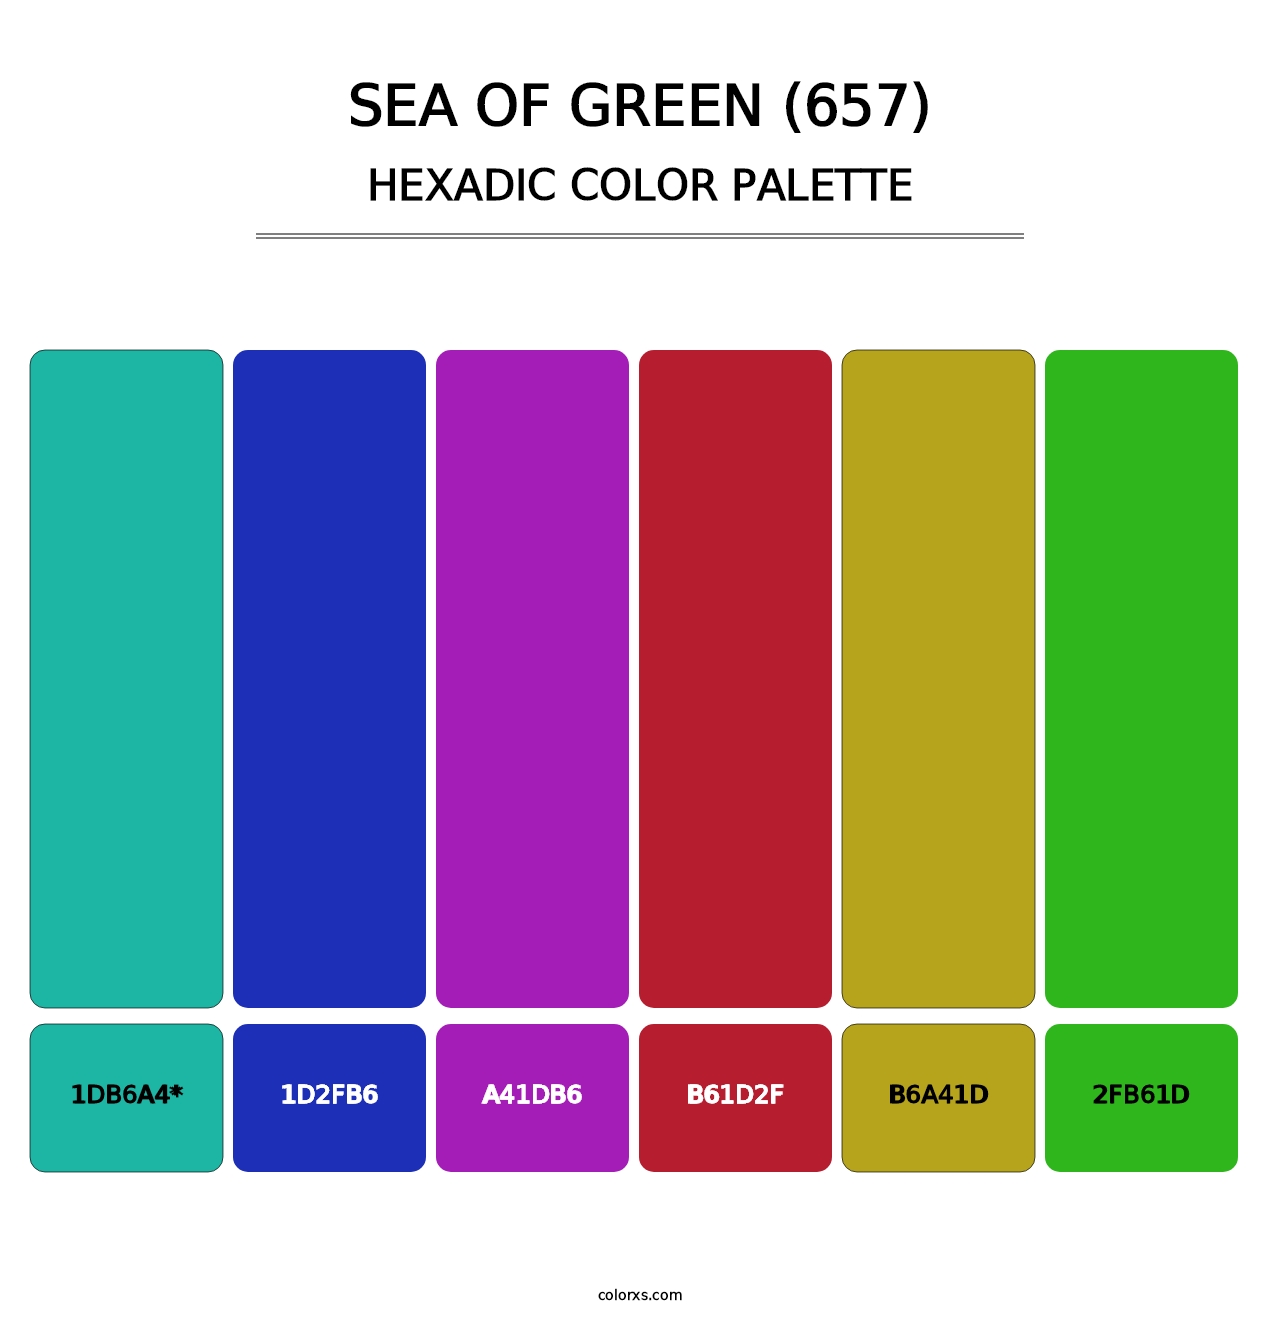 Sea of Green (657) - Hexadic Color Palette